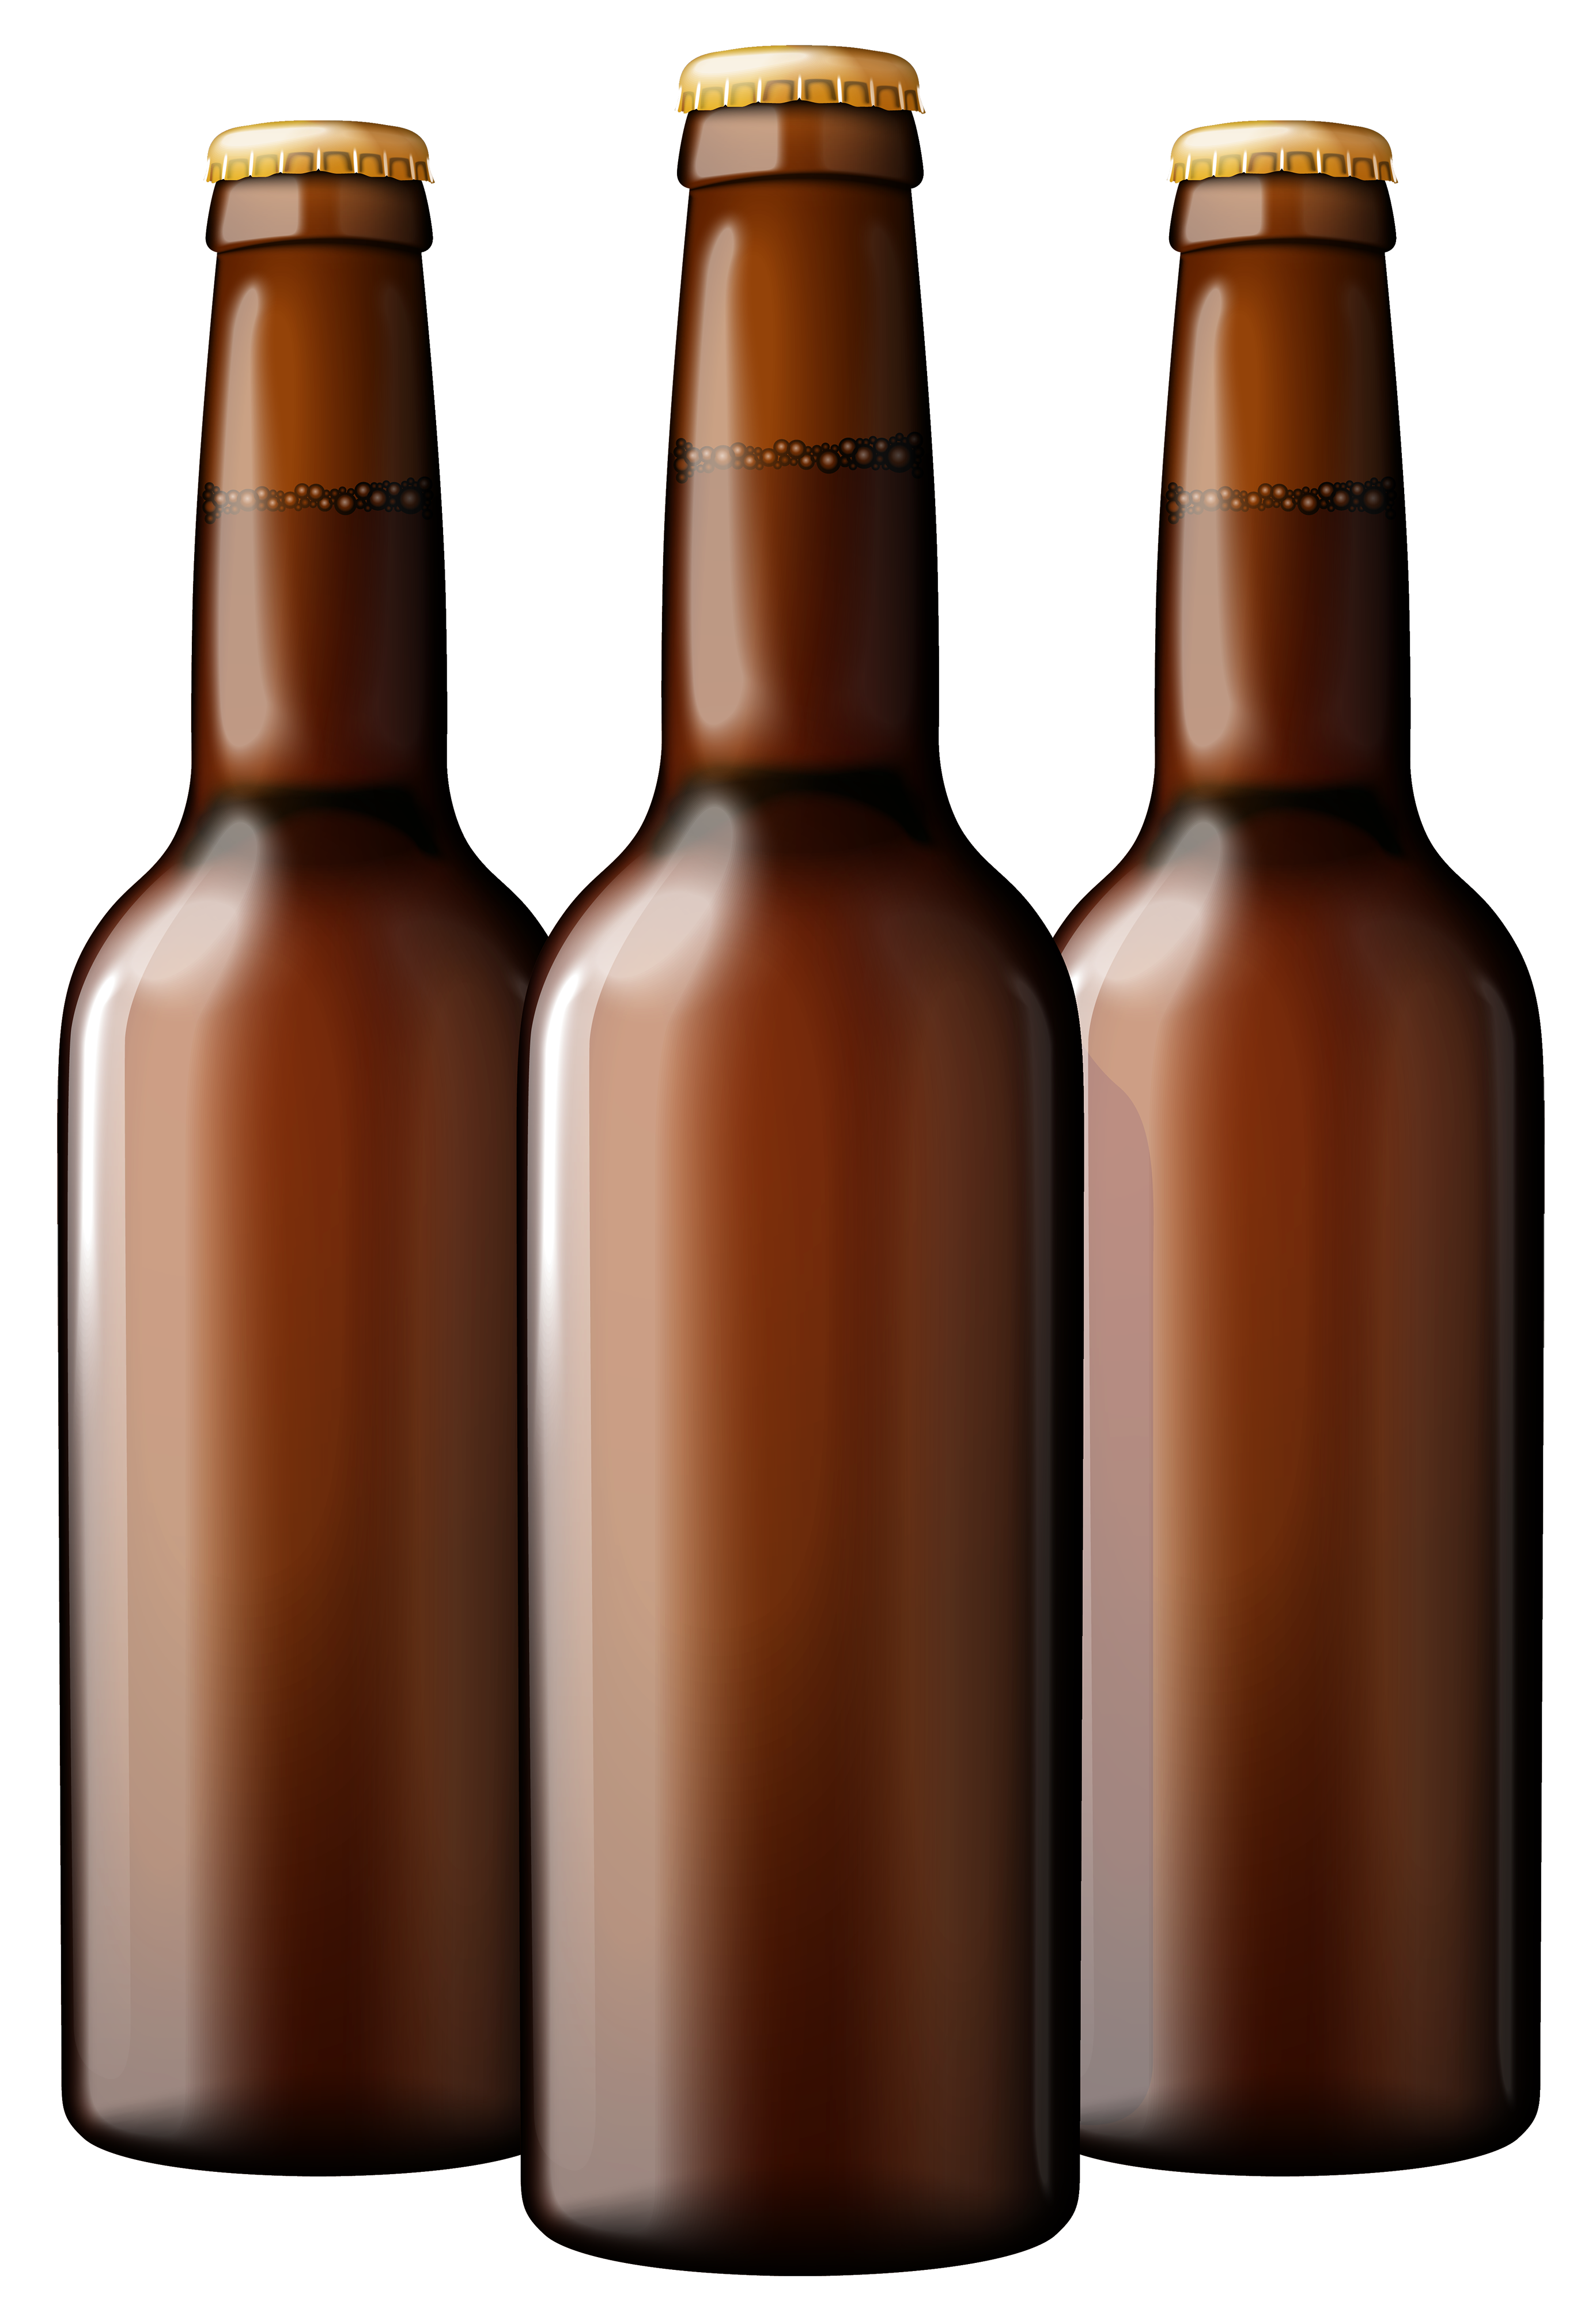 Brown Beer Bottles Png Clipart - Beer Bottle, Transparent background PNG HD thumbnail